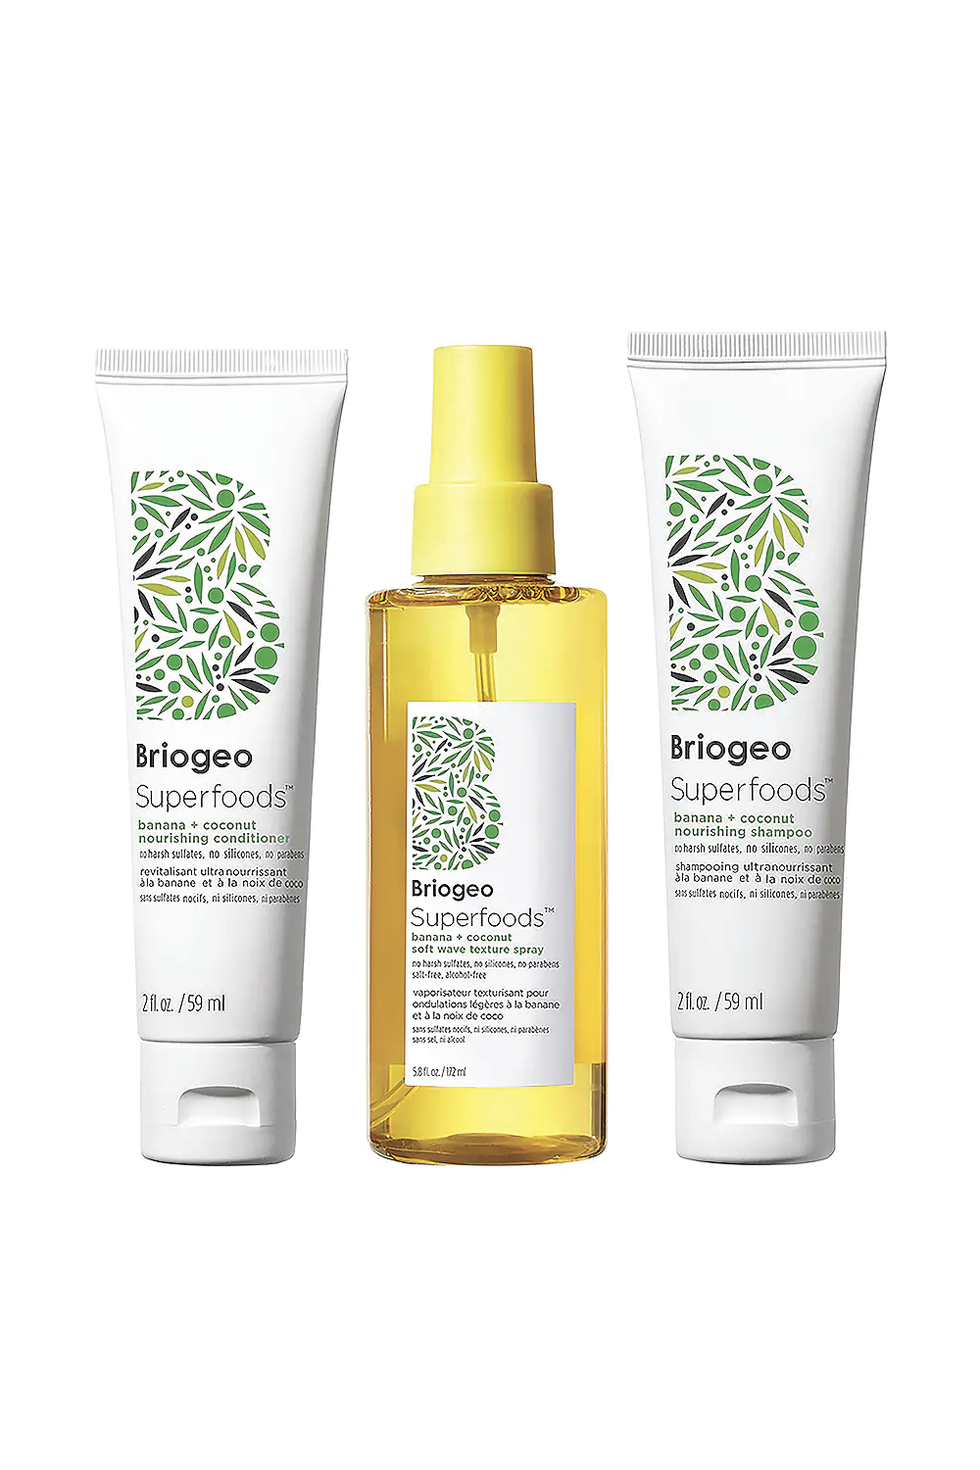 Briogeo Tropical Hair-Adise Hair Care Kit